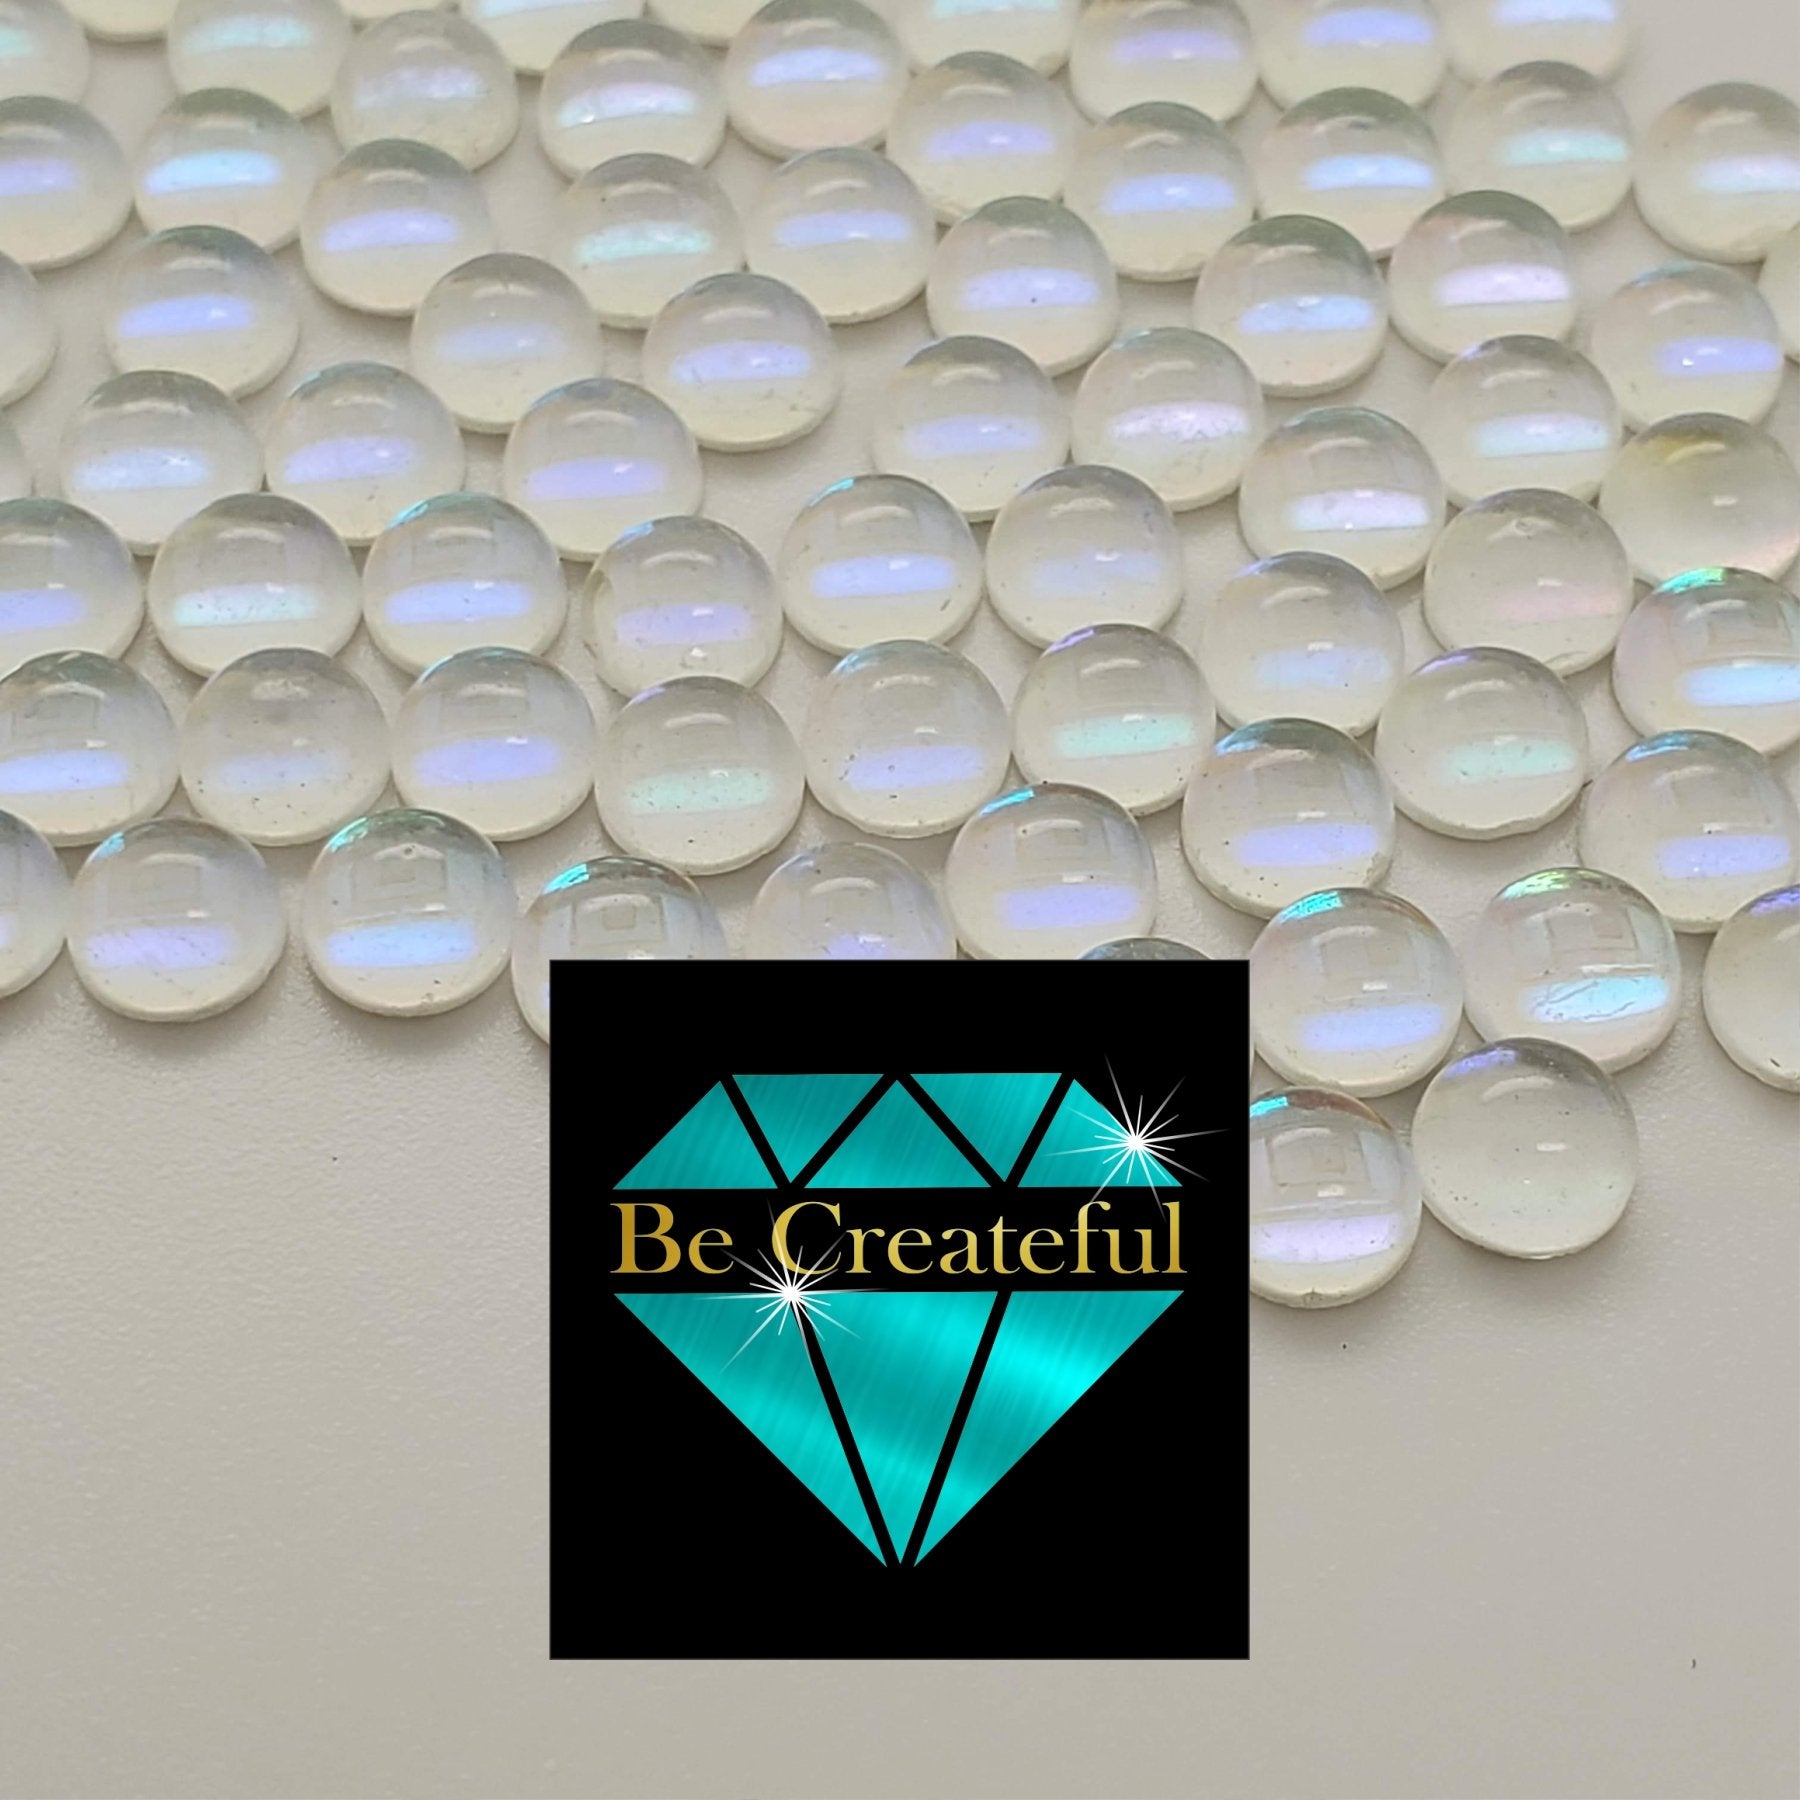 SS20 Royal Blue Hotfix Rhinestones Crystal Glass Gemstone Bulk for Fabric Clothes Shirts Shoes Bling Decoration Gifts Flat Back Round(48mm 1440PCS)